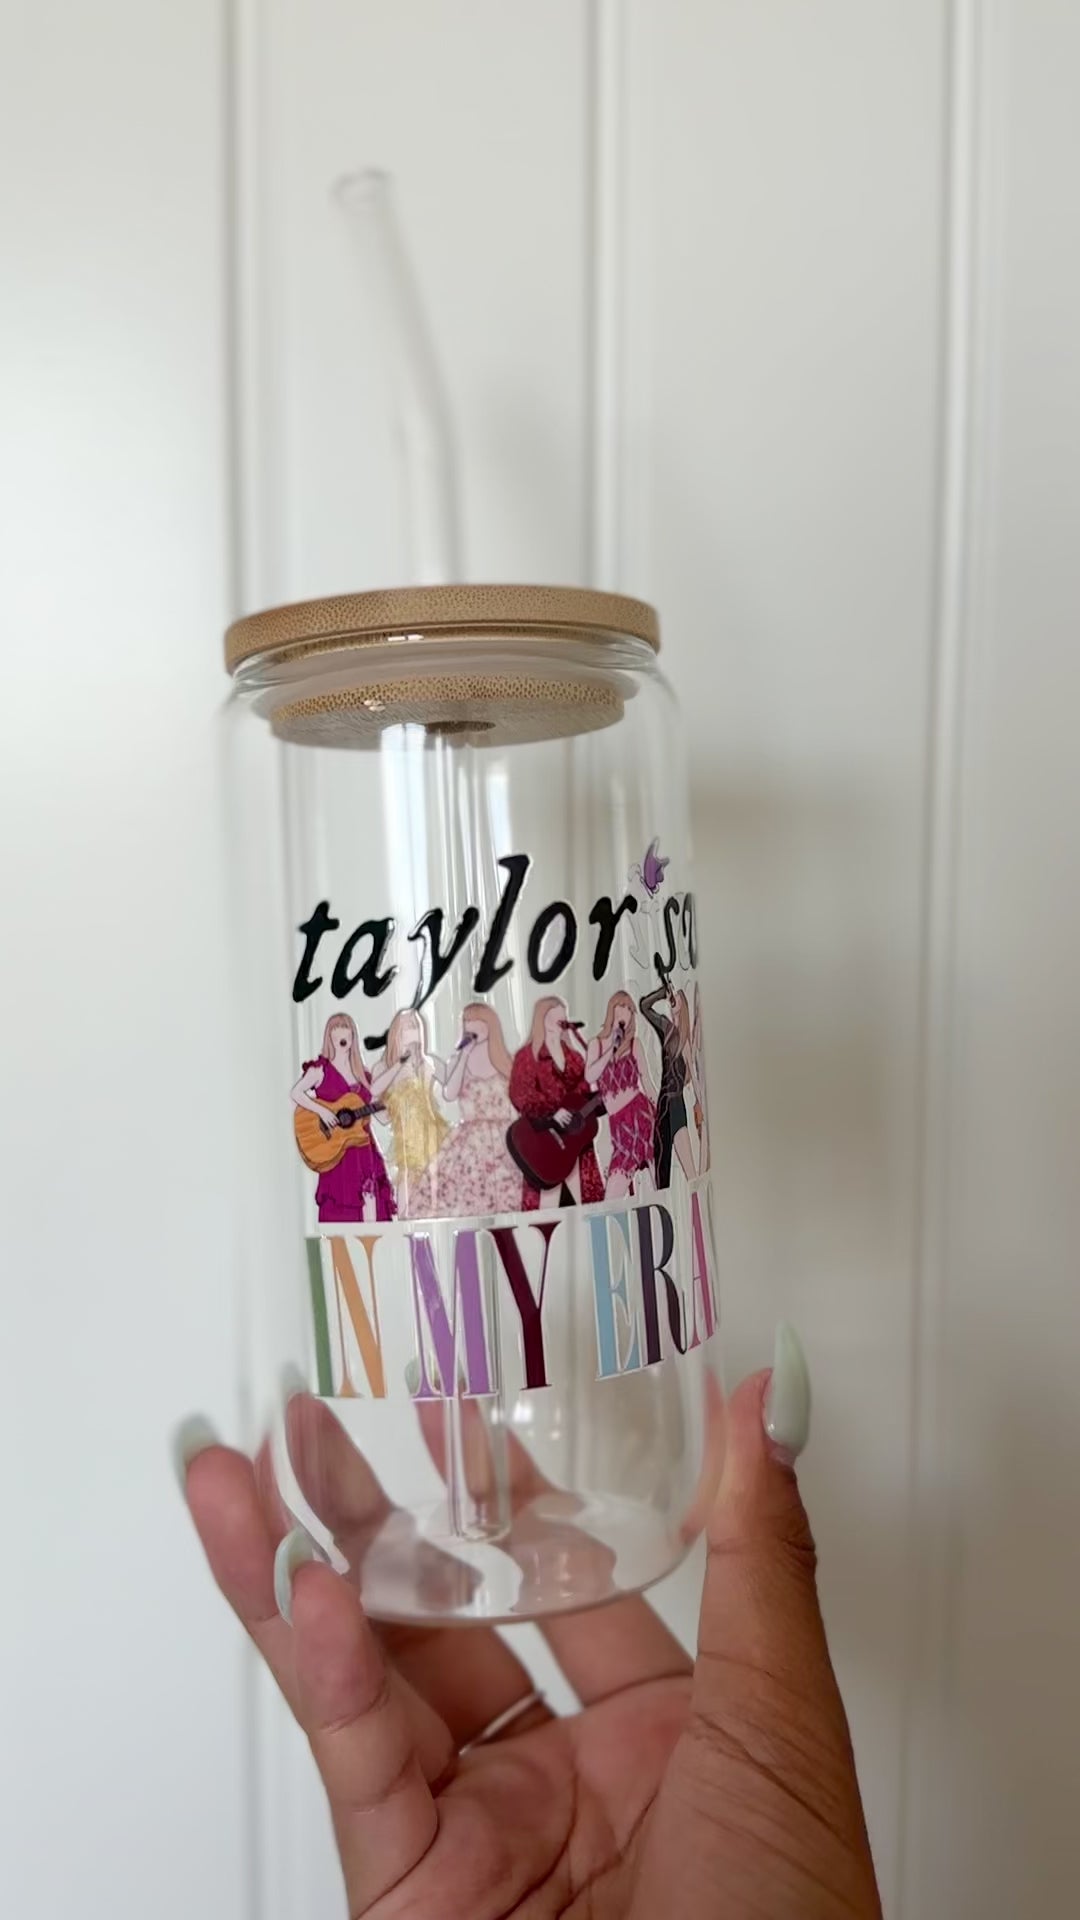 Taylor swift glass cups australia｜TikTok Search